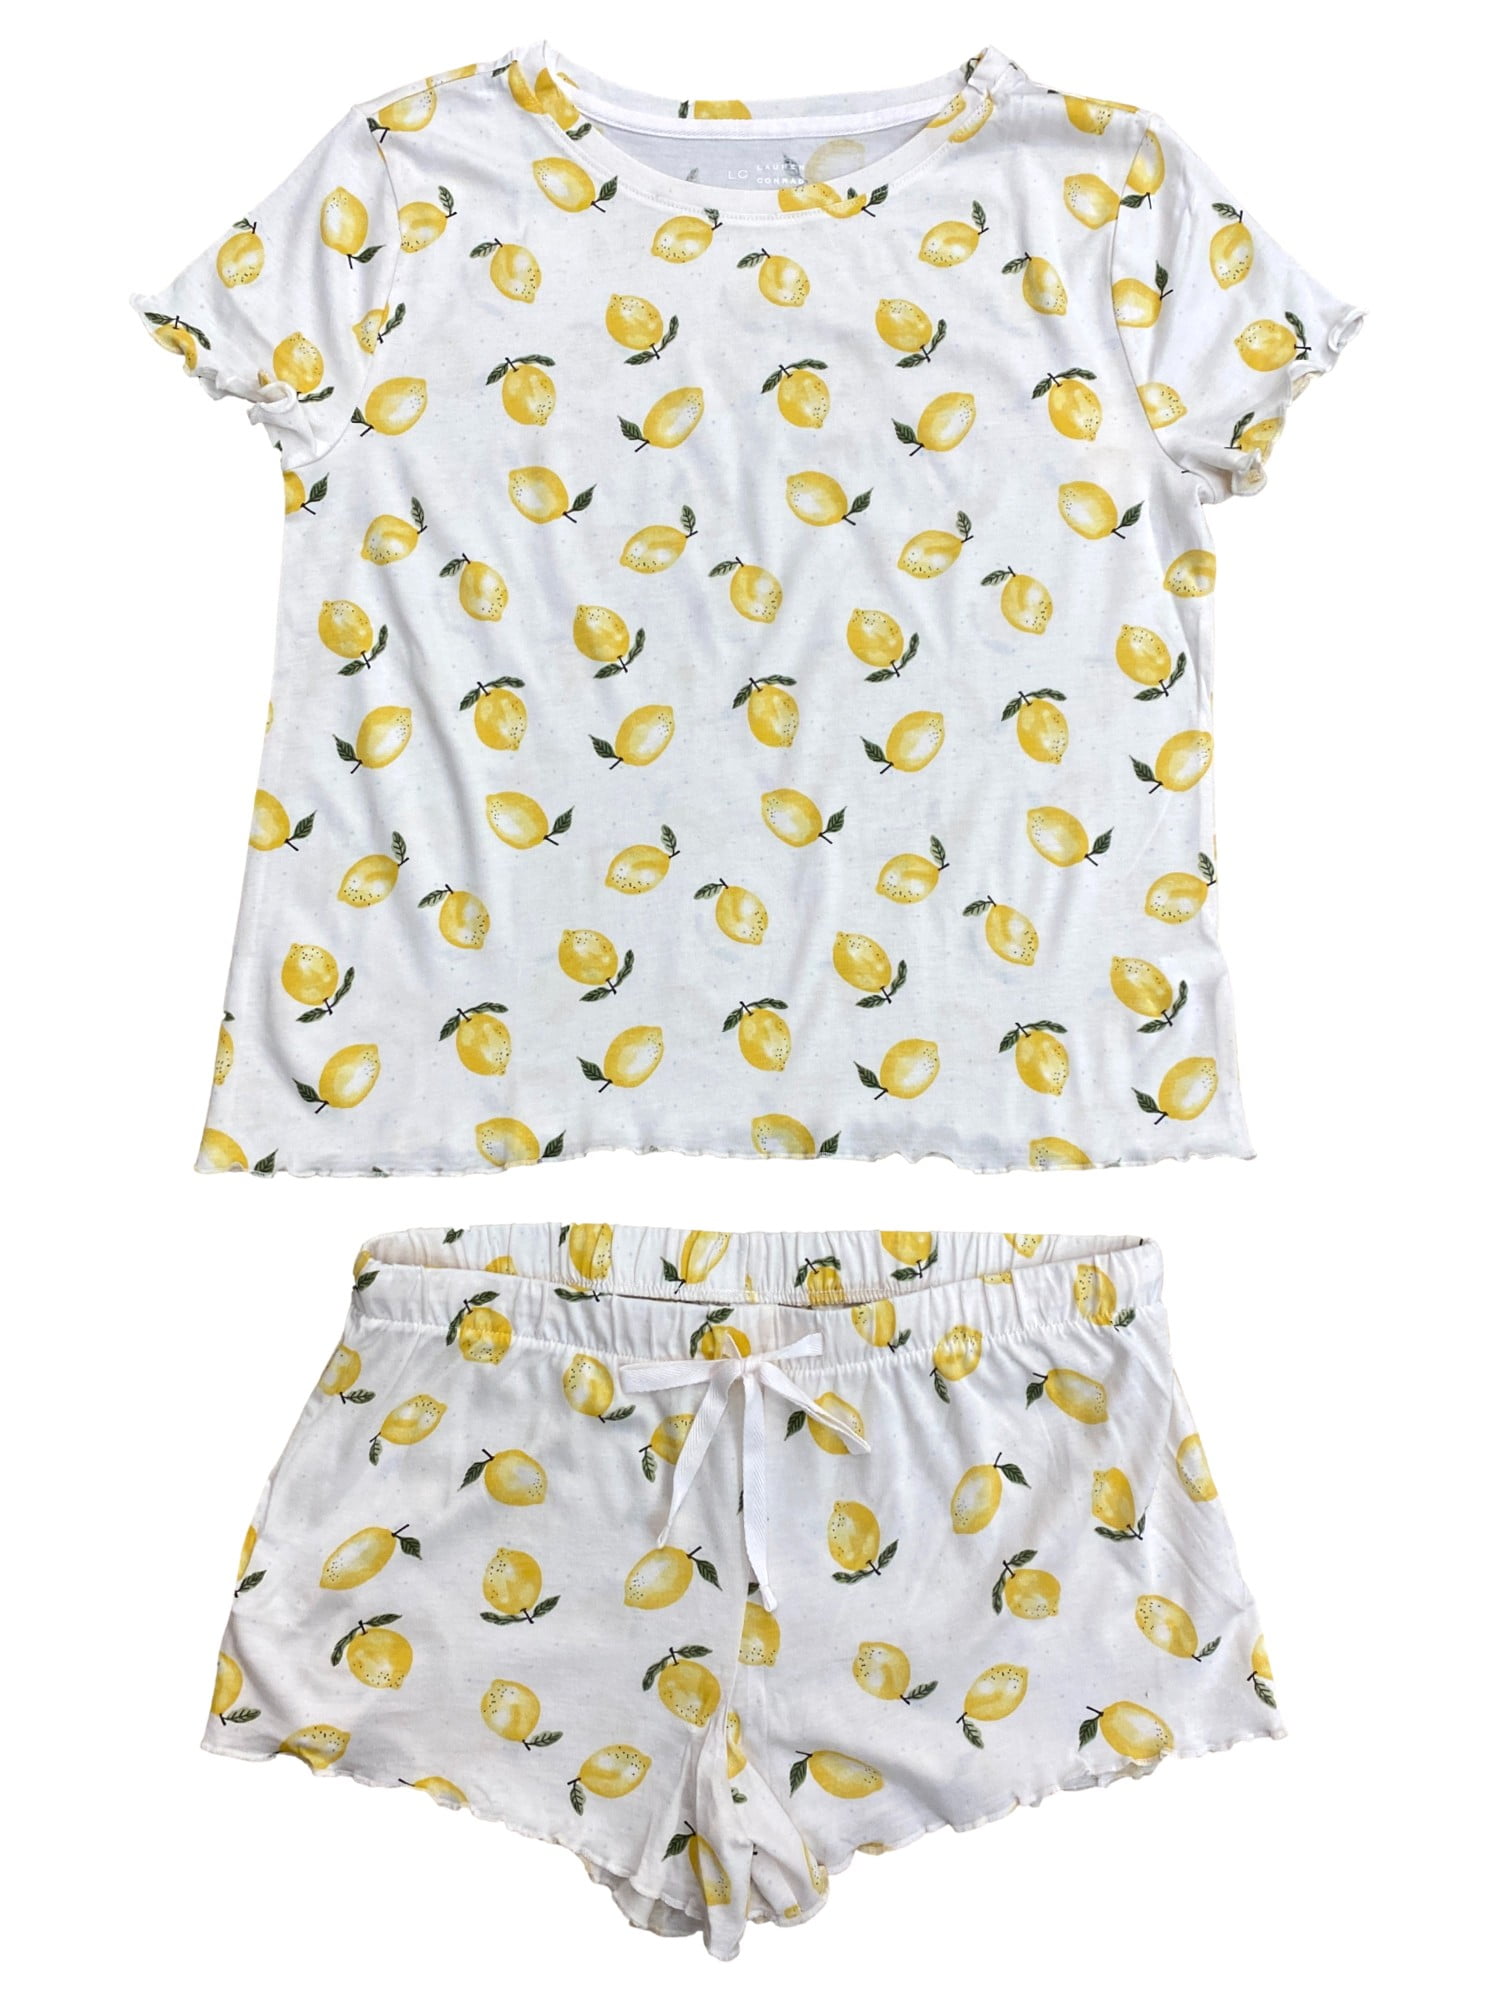 Womens Lightweight Yellow Lemon Pajamas Shorts & Tee Shirt Sleep